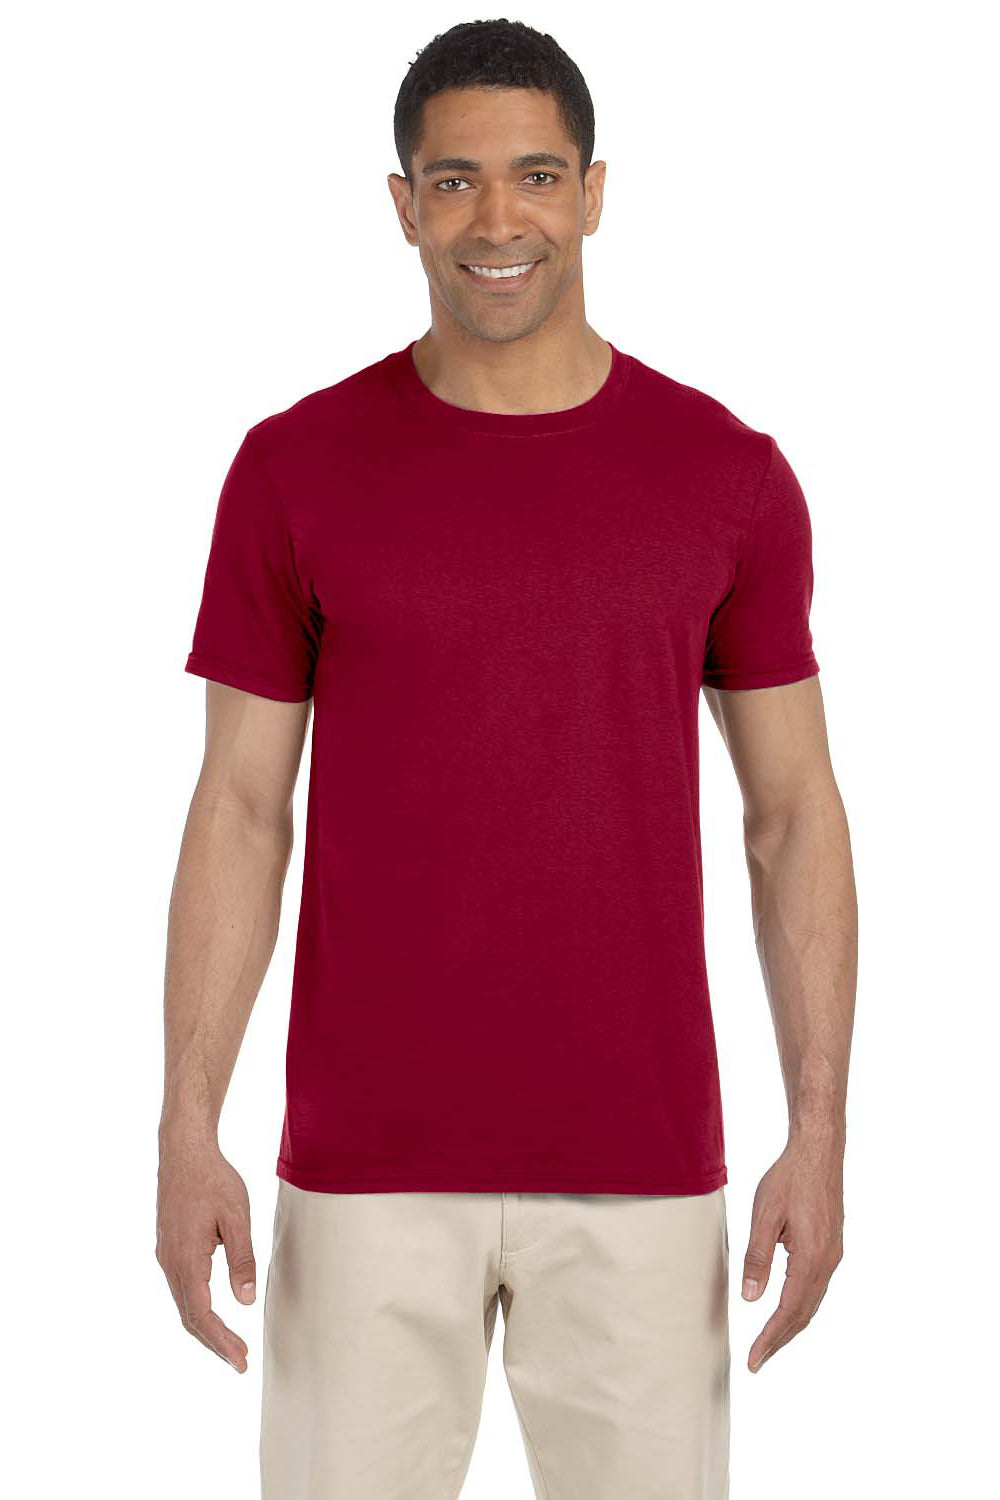 Gildan G640 Mens Softstyle Short Sleeve Crewneck T-Shirt Cardinal Red Front